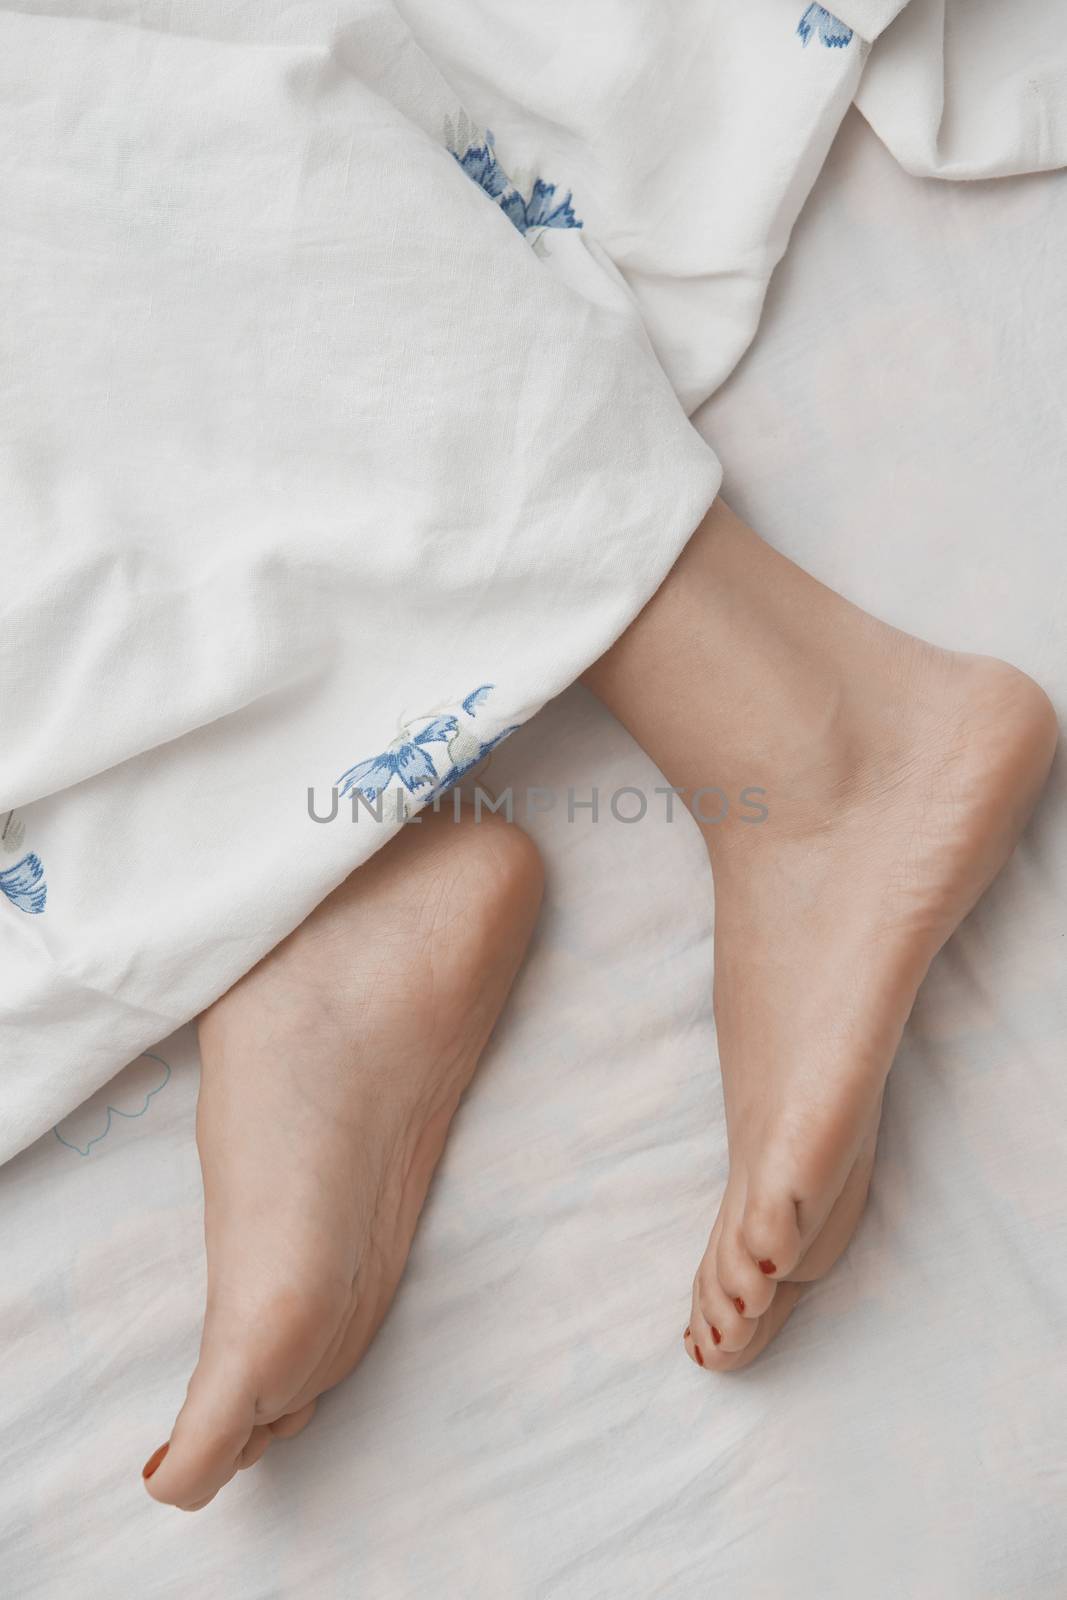 Feet of sleeping woman. Vertical photo